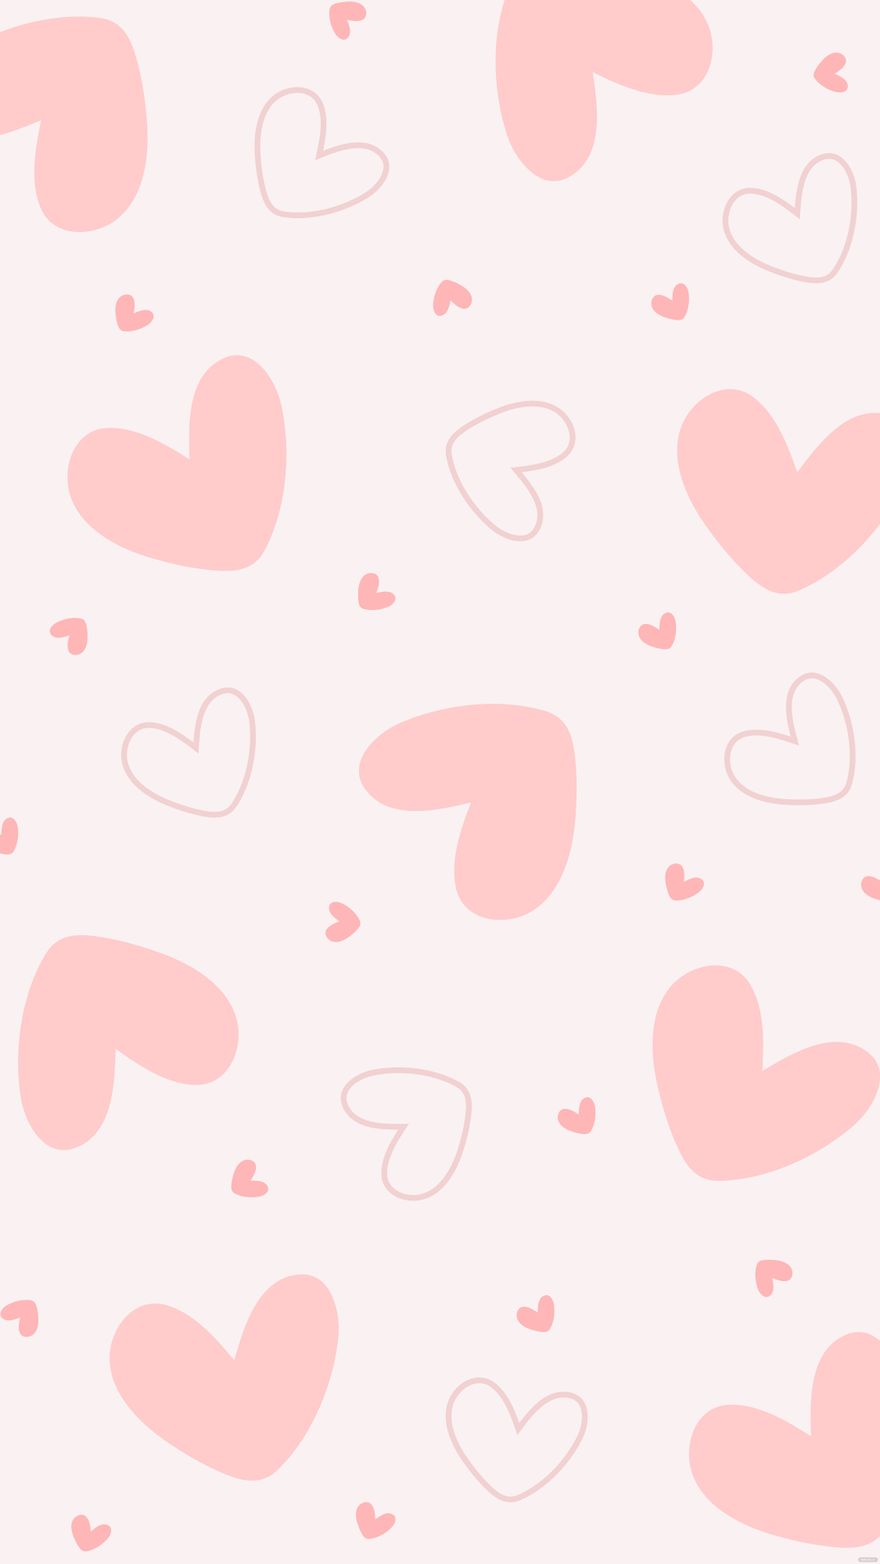 Free Pastel Pink Heart Background - EPS, Illustrator, JPG, SVG |  